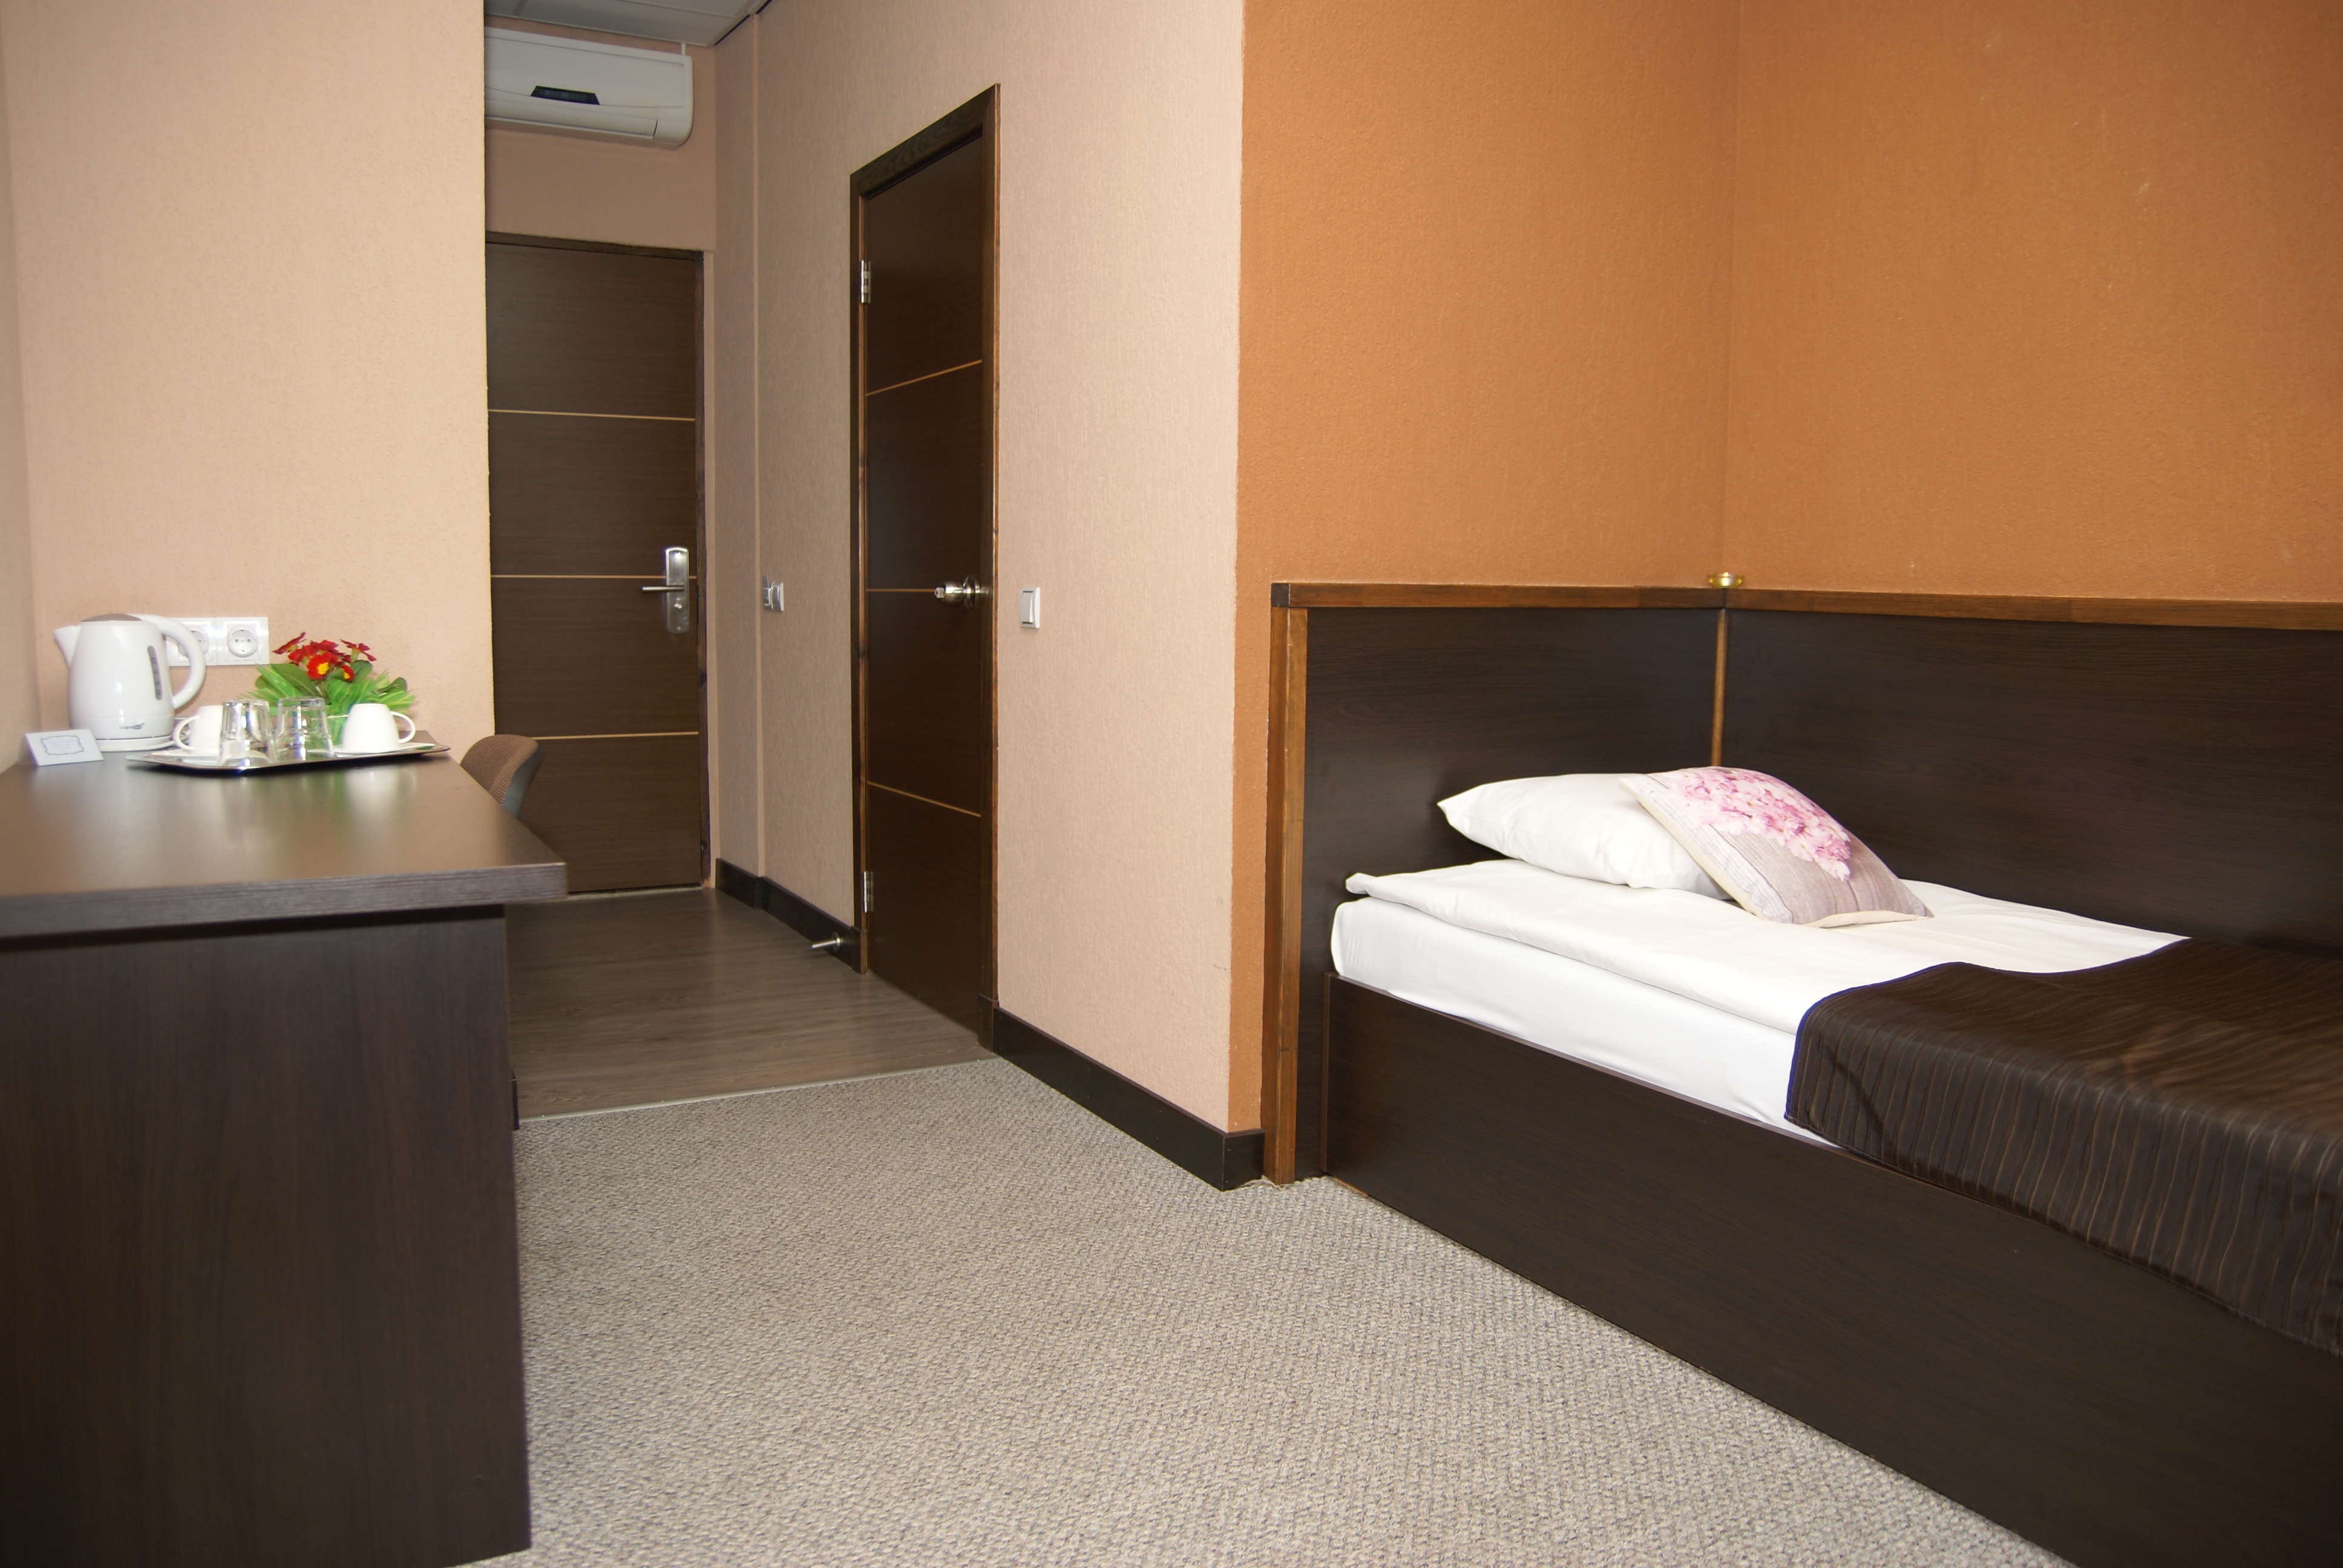 Kazlu ruda hotel one person room